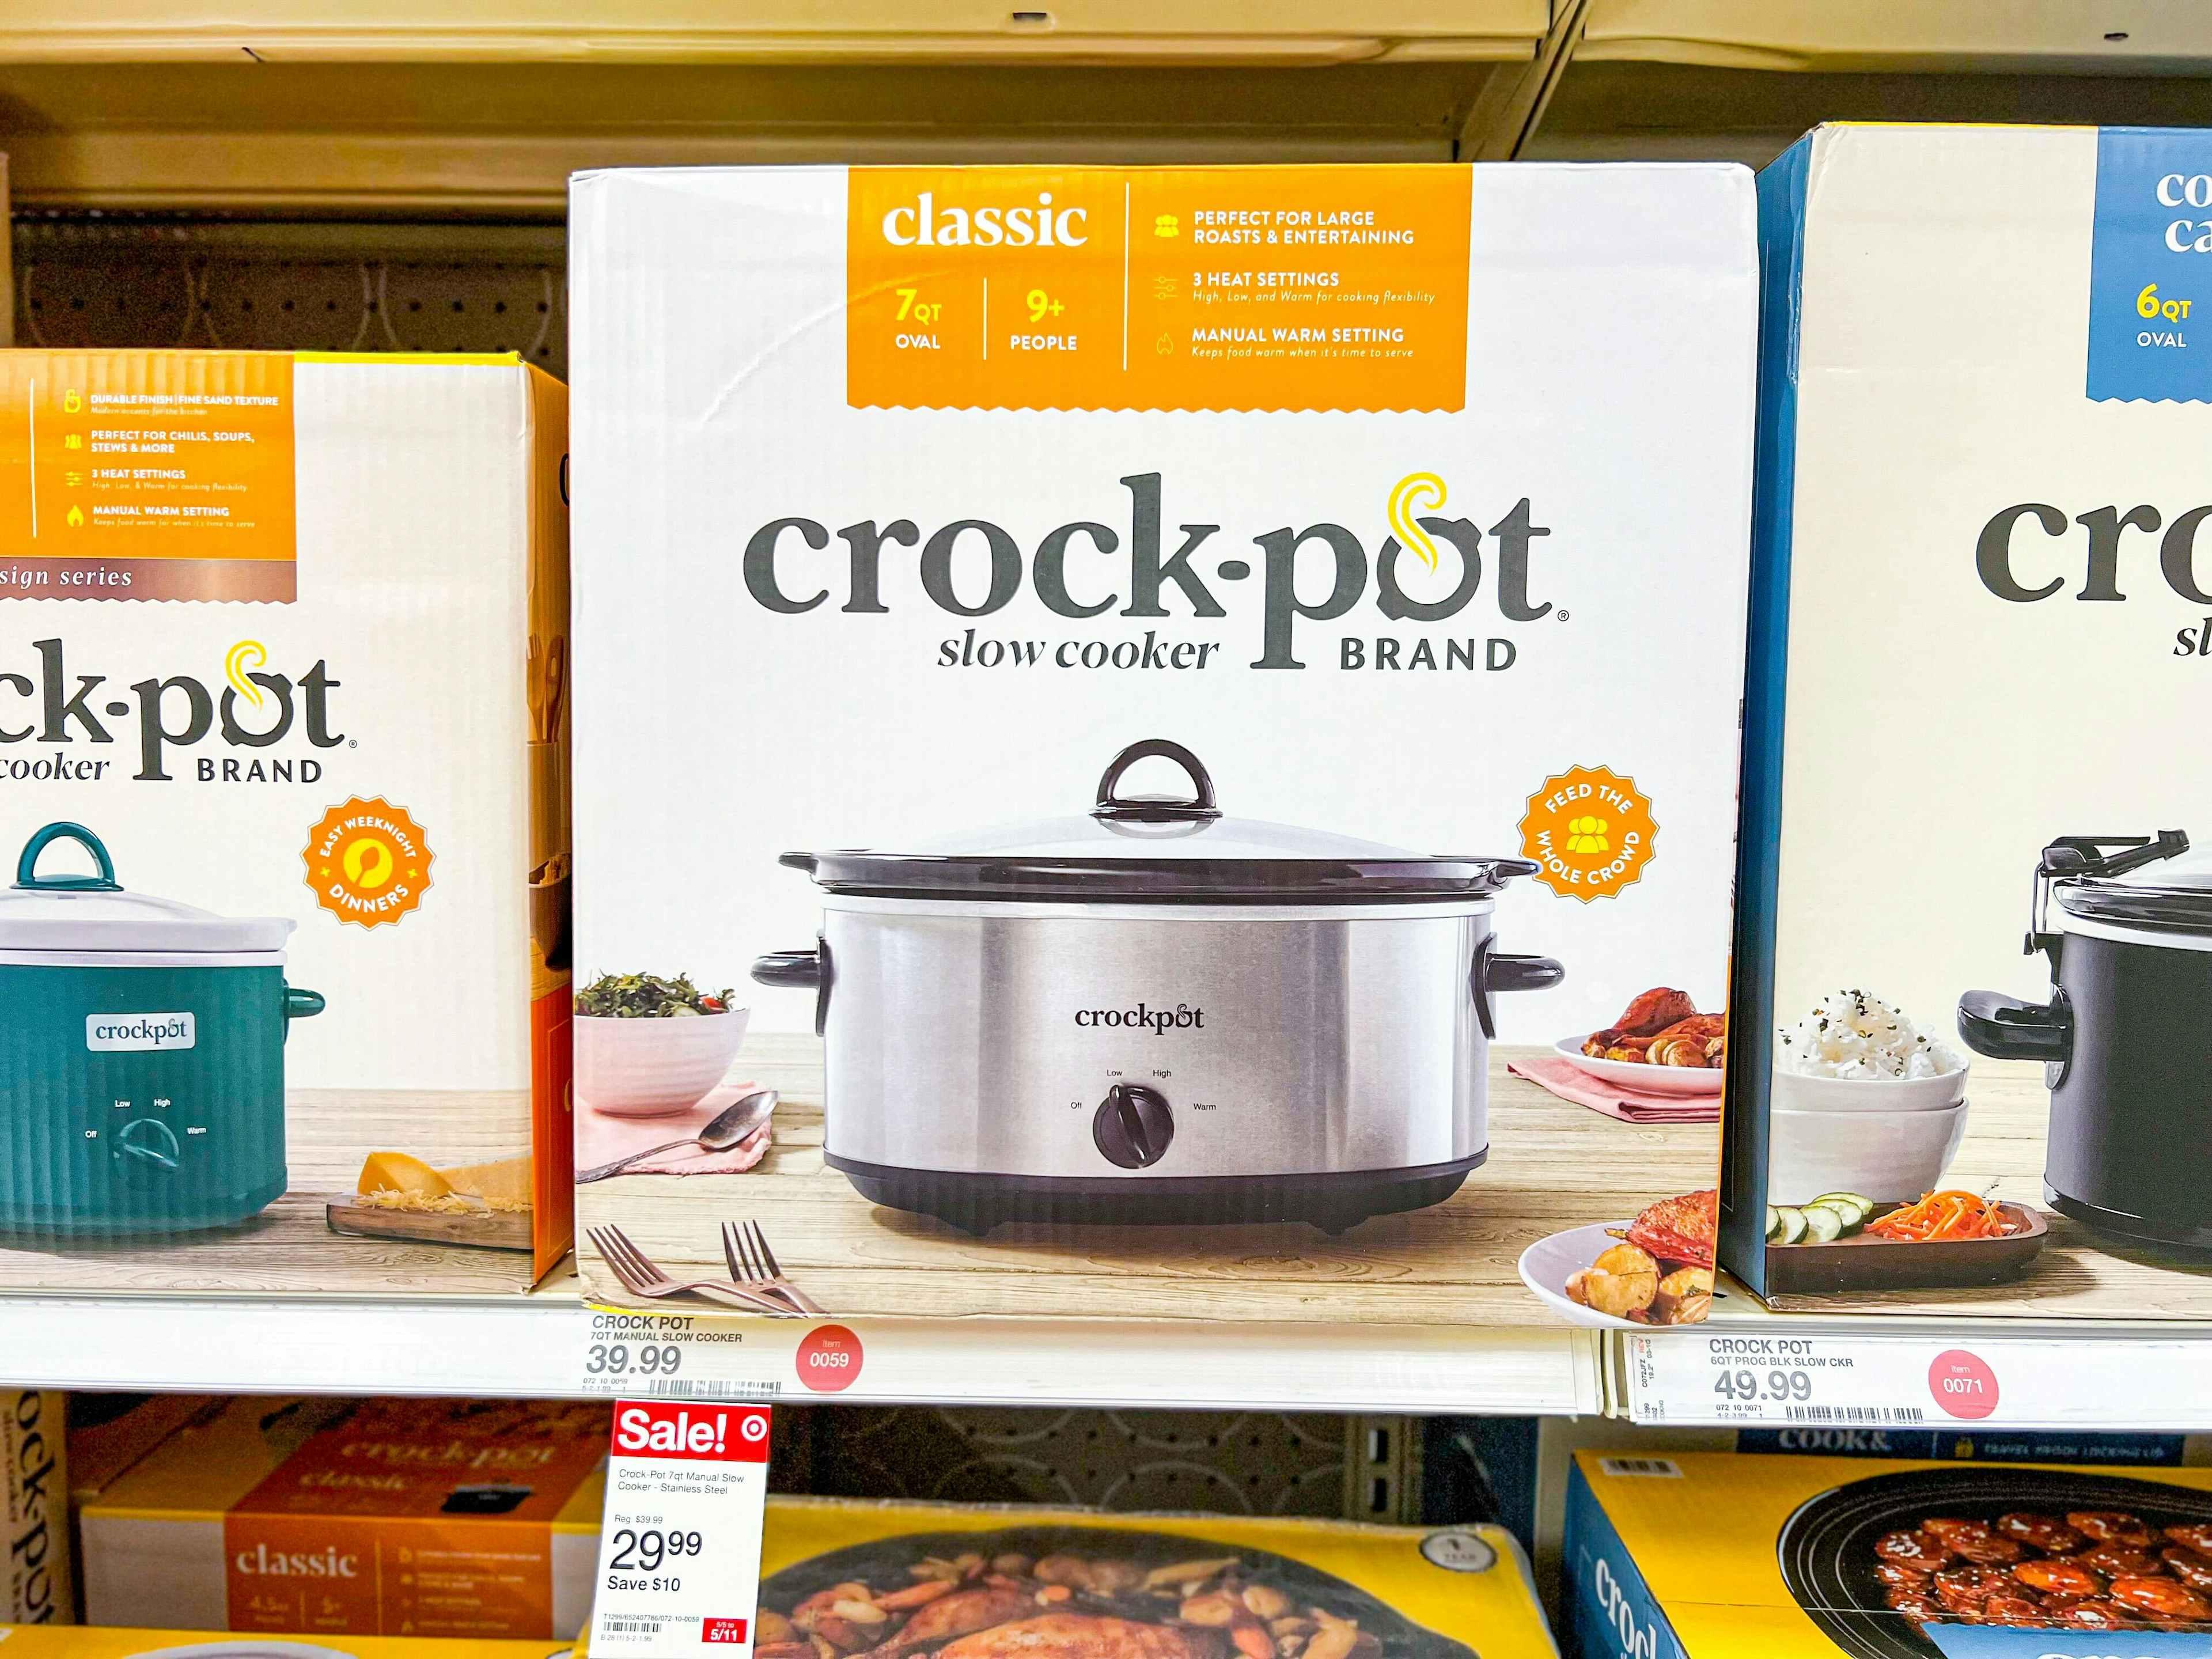 crockpot-7quart-slow-cooker-target1